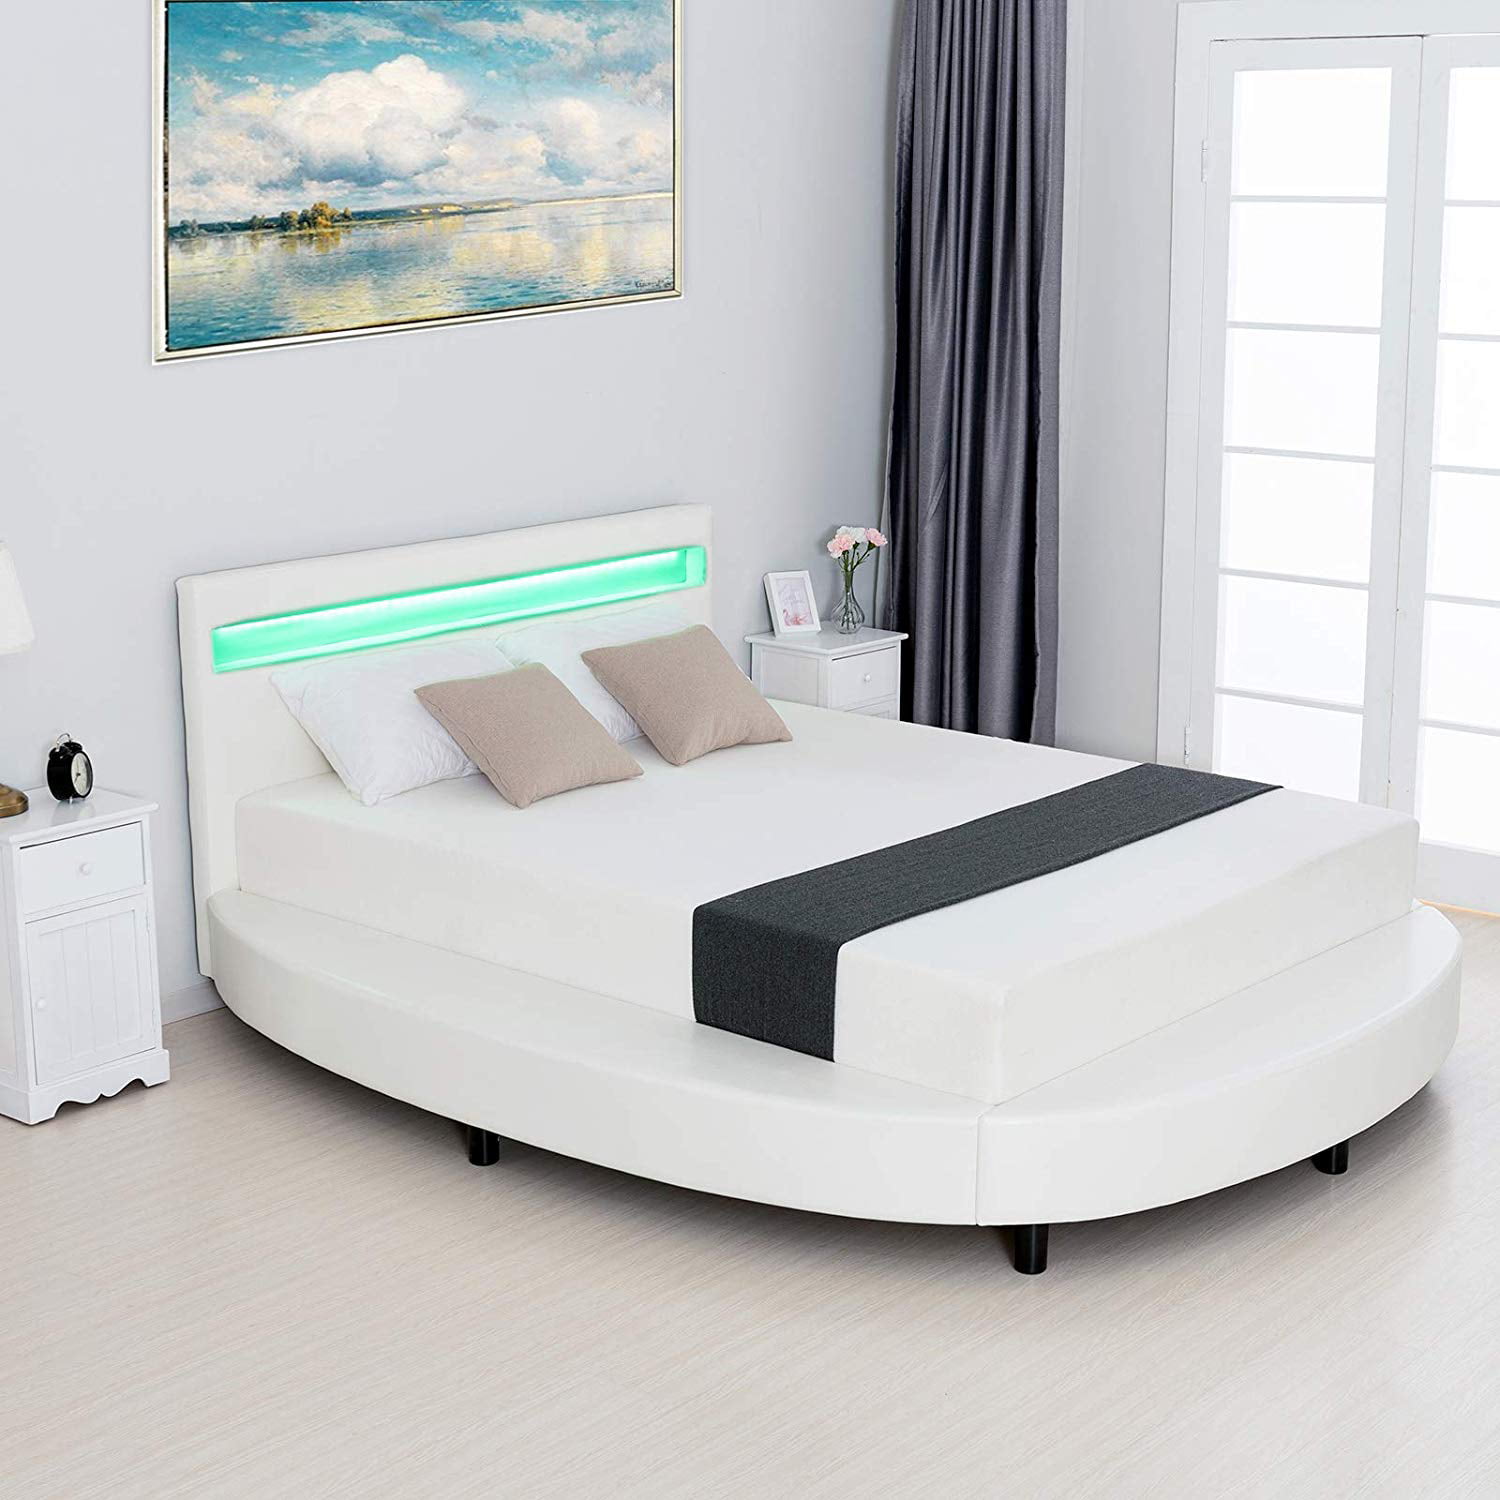 Mecor Modern Upholstered Round Platform, Modern White Leather Headboard Round Bed King